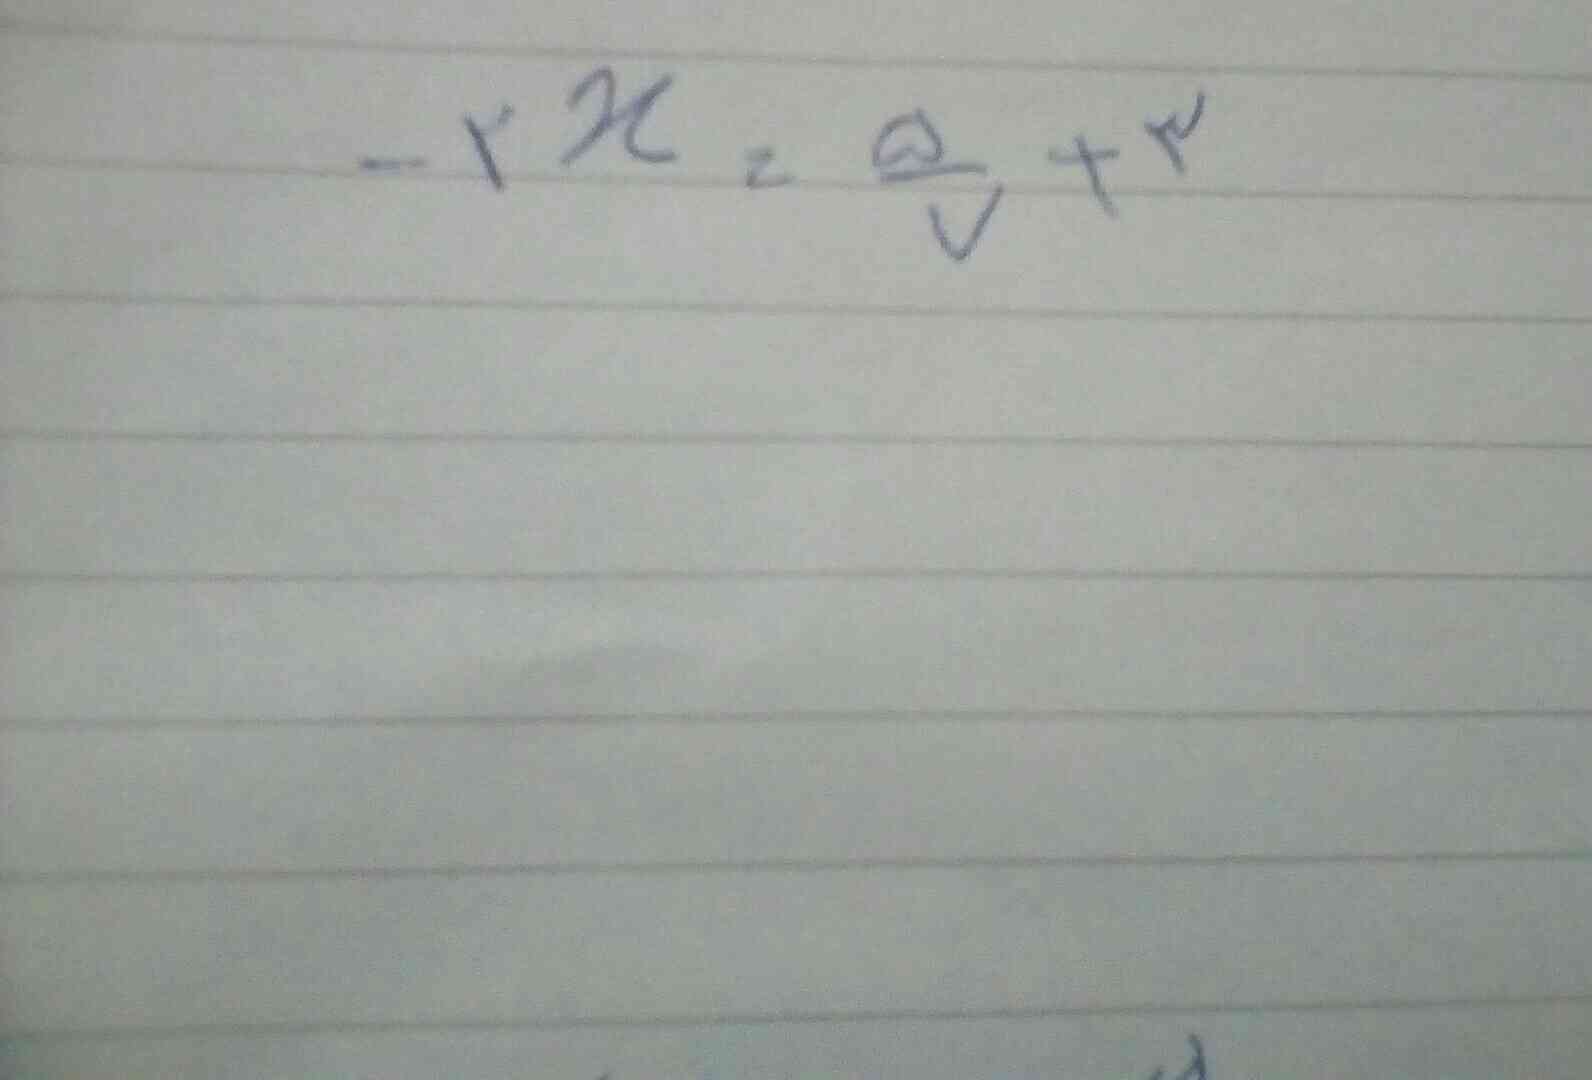 جواب این معادله رو بگین ممنون 